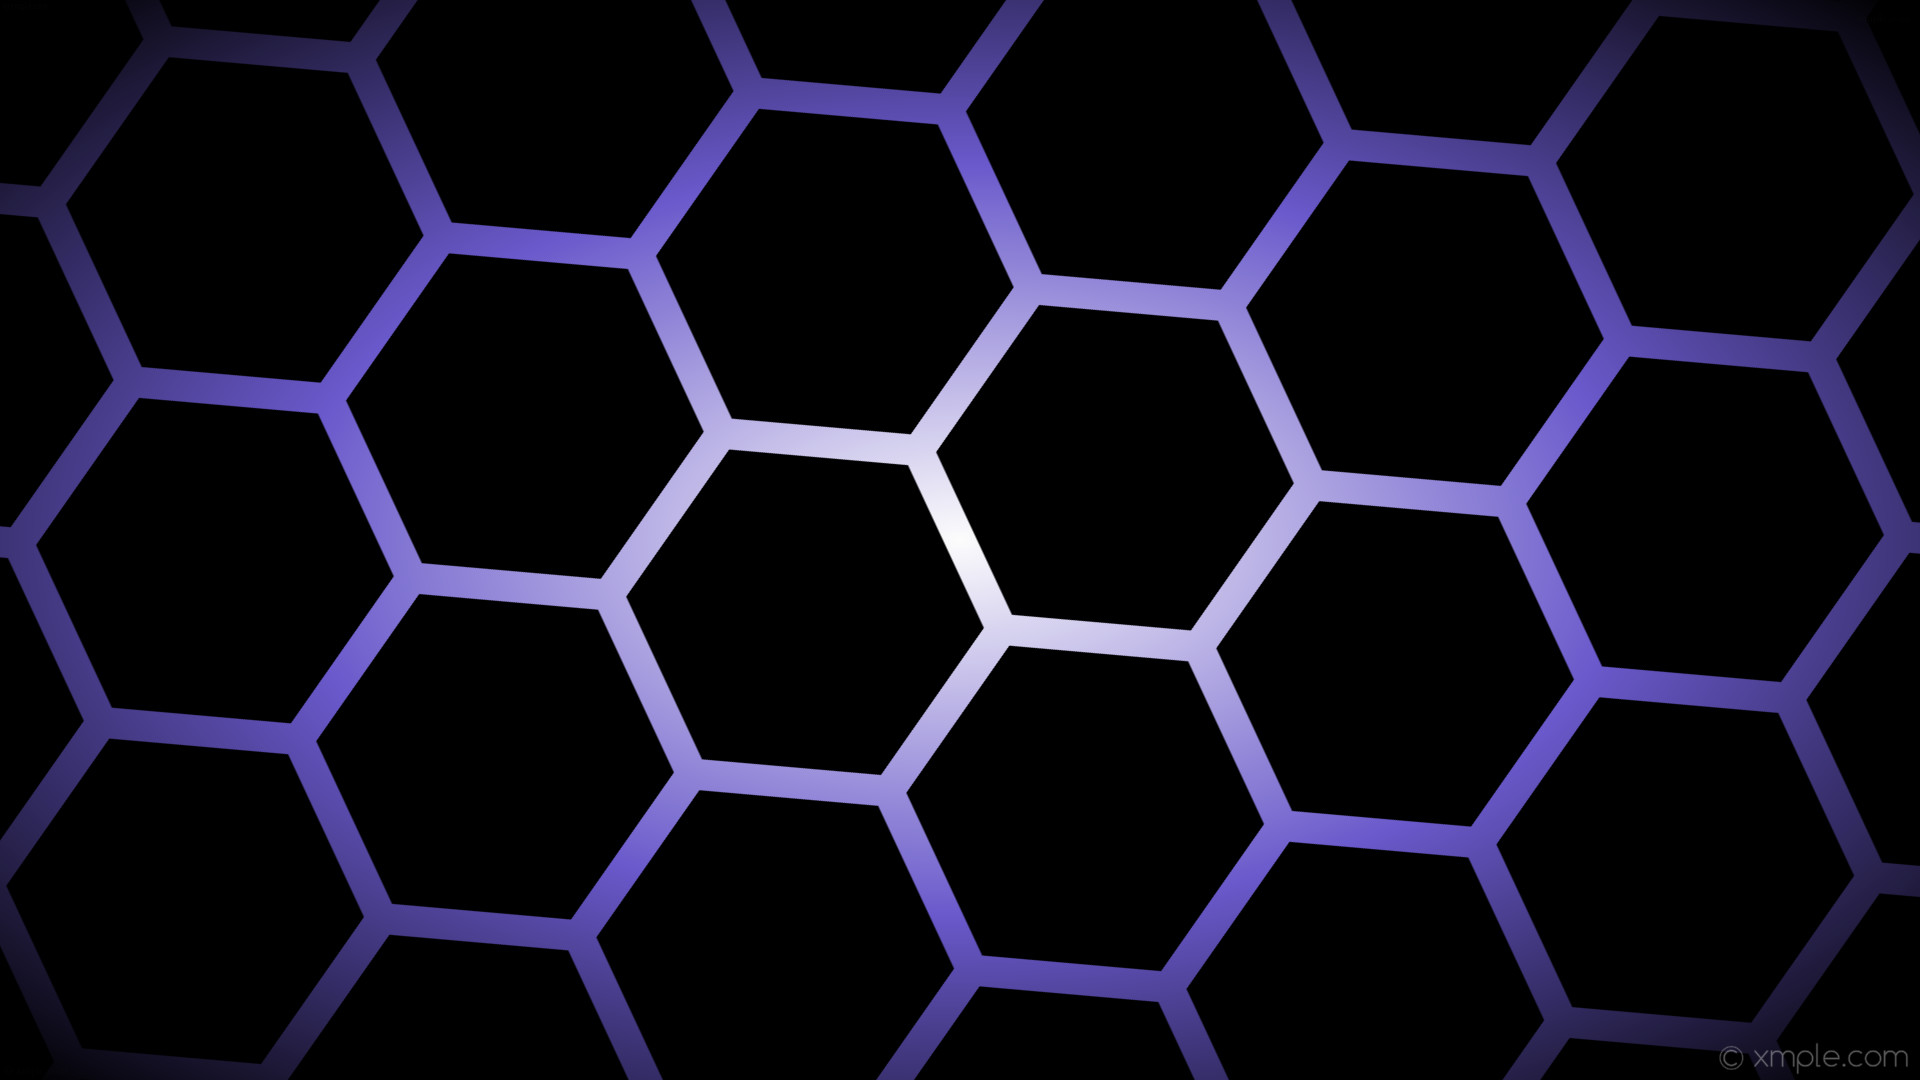 1920x1080 wallpaper purple white glow gradient hexagon black slate blue #000000  #ffffff #6a5acd diagonal